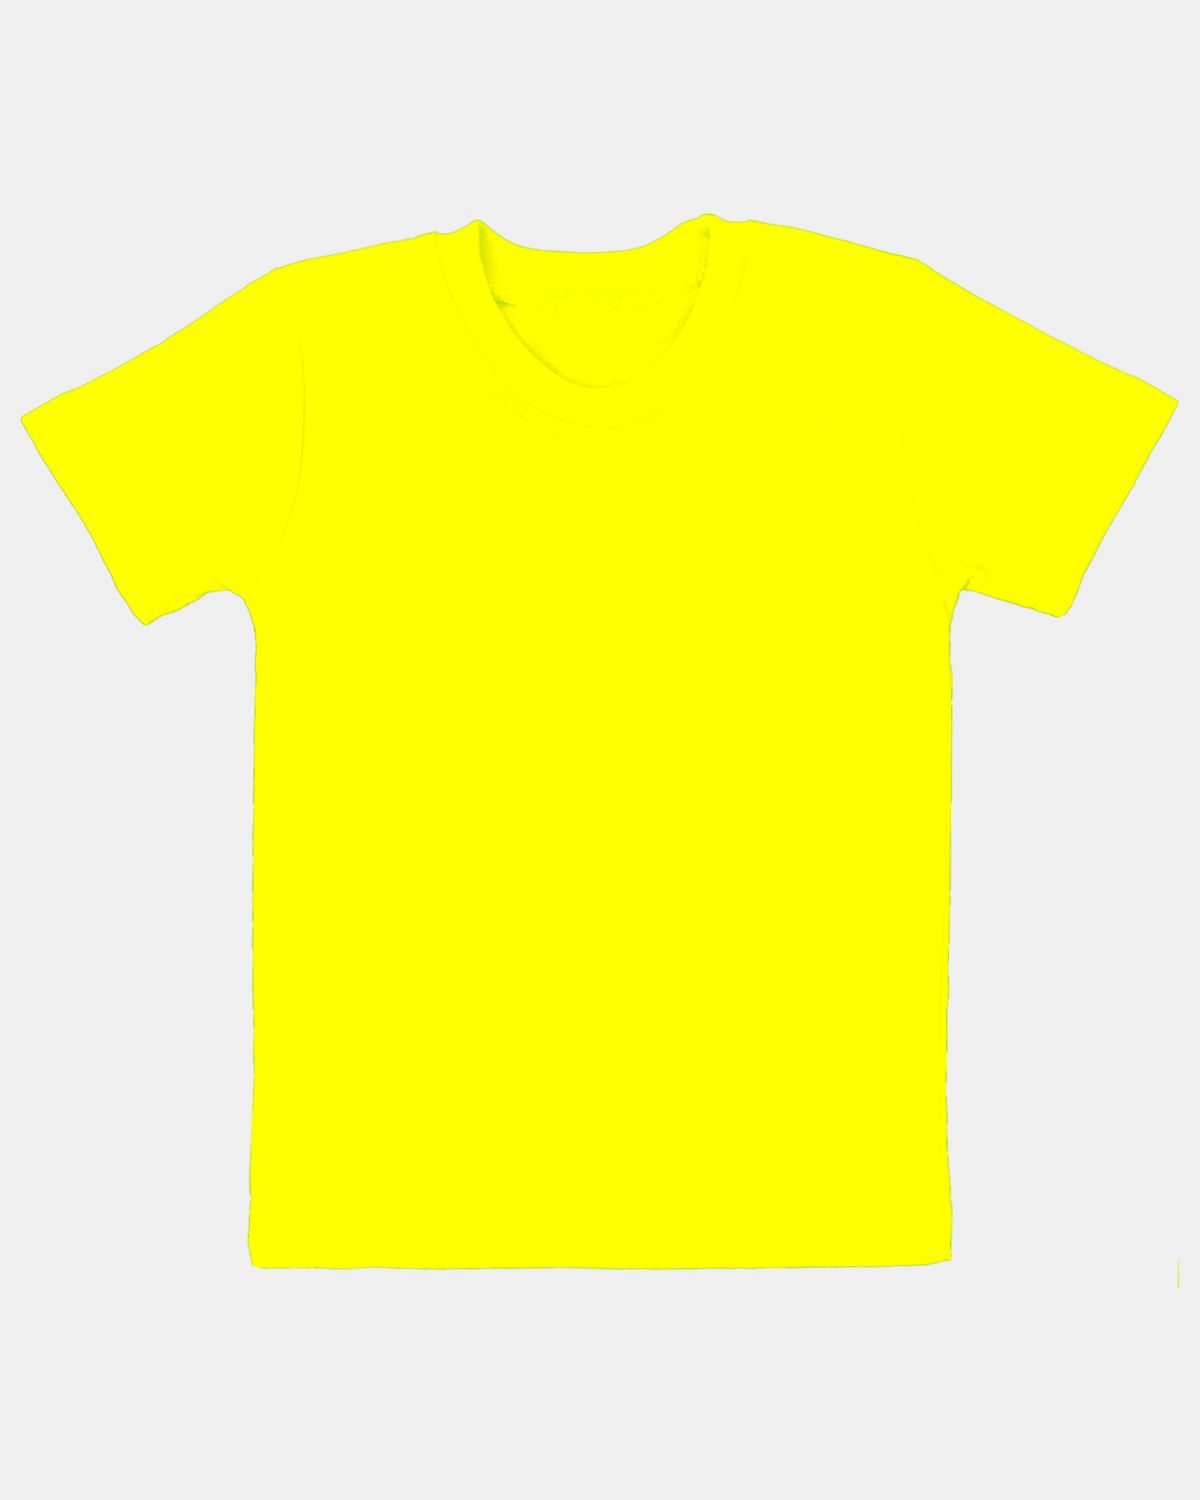 Желтые х б. Желтая футболка детская. Ярко желтая футболка. Желтая футболка с принтом. Футболка для девочки желтая.